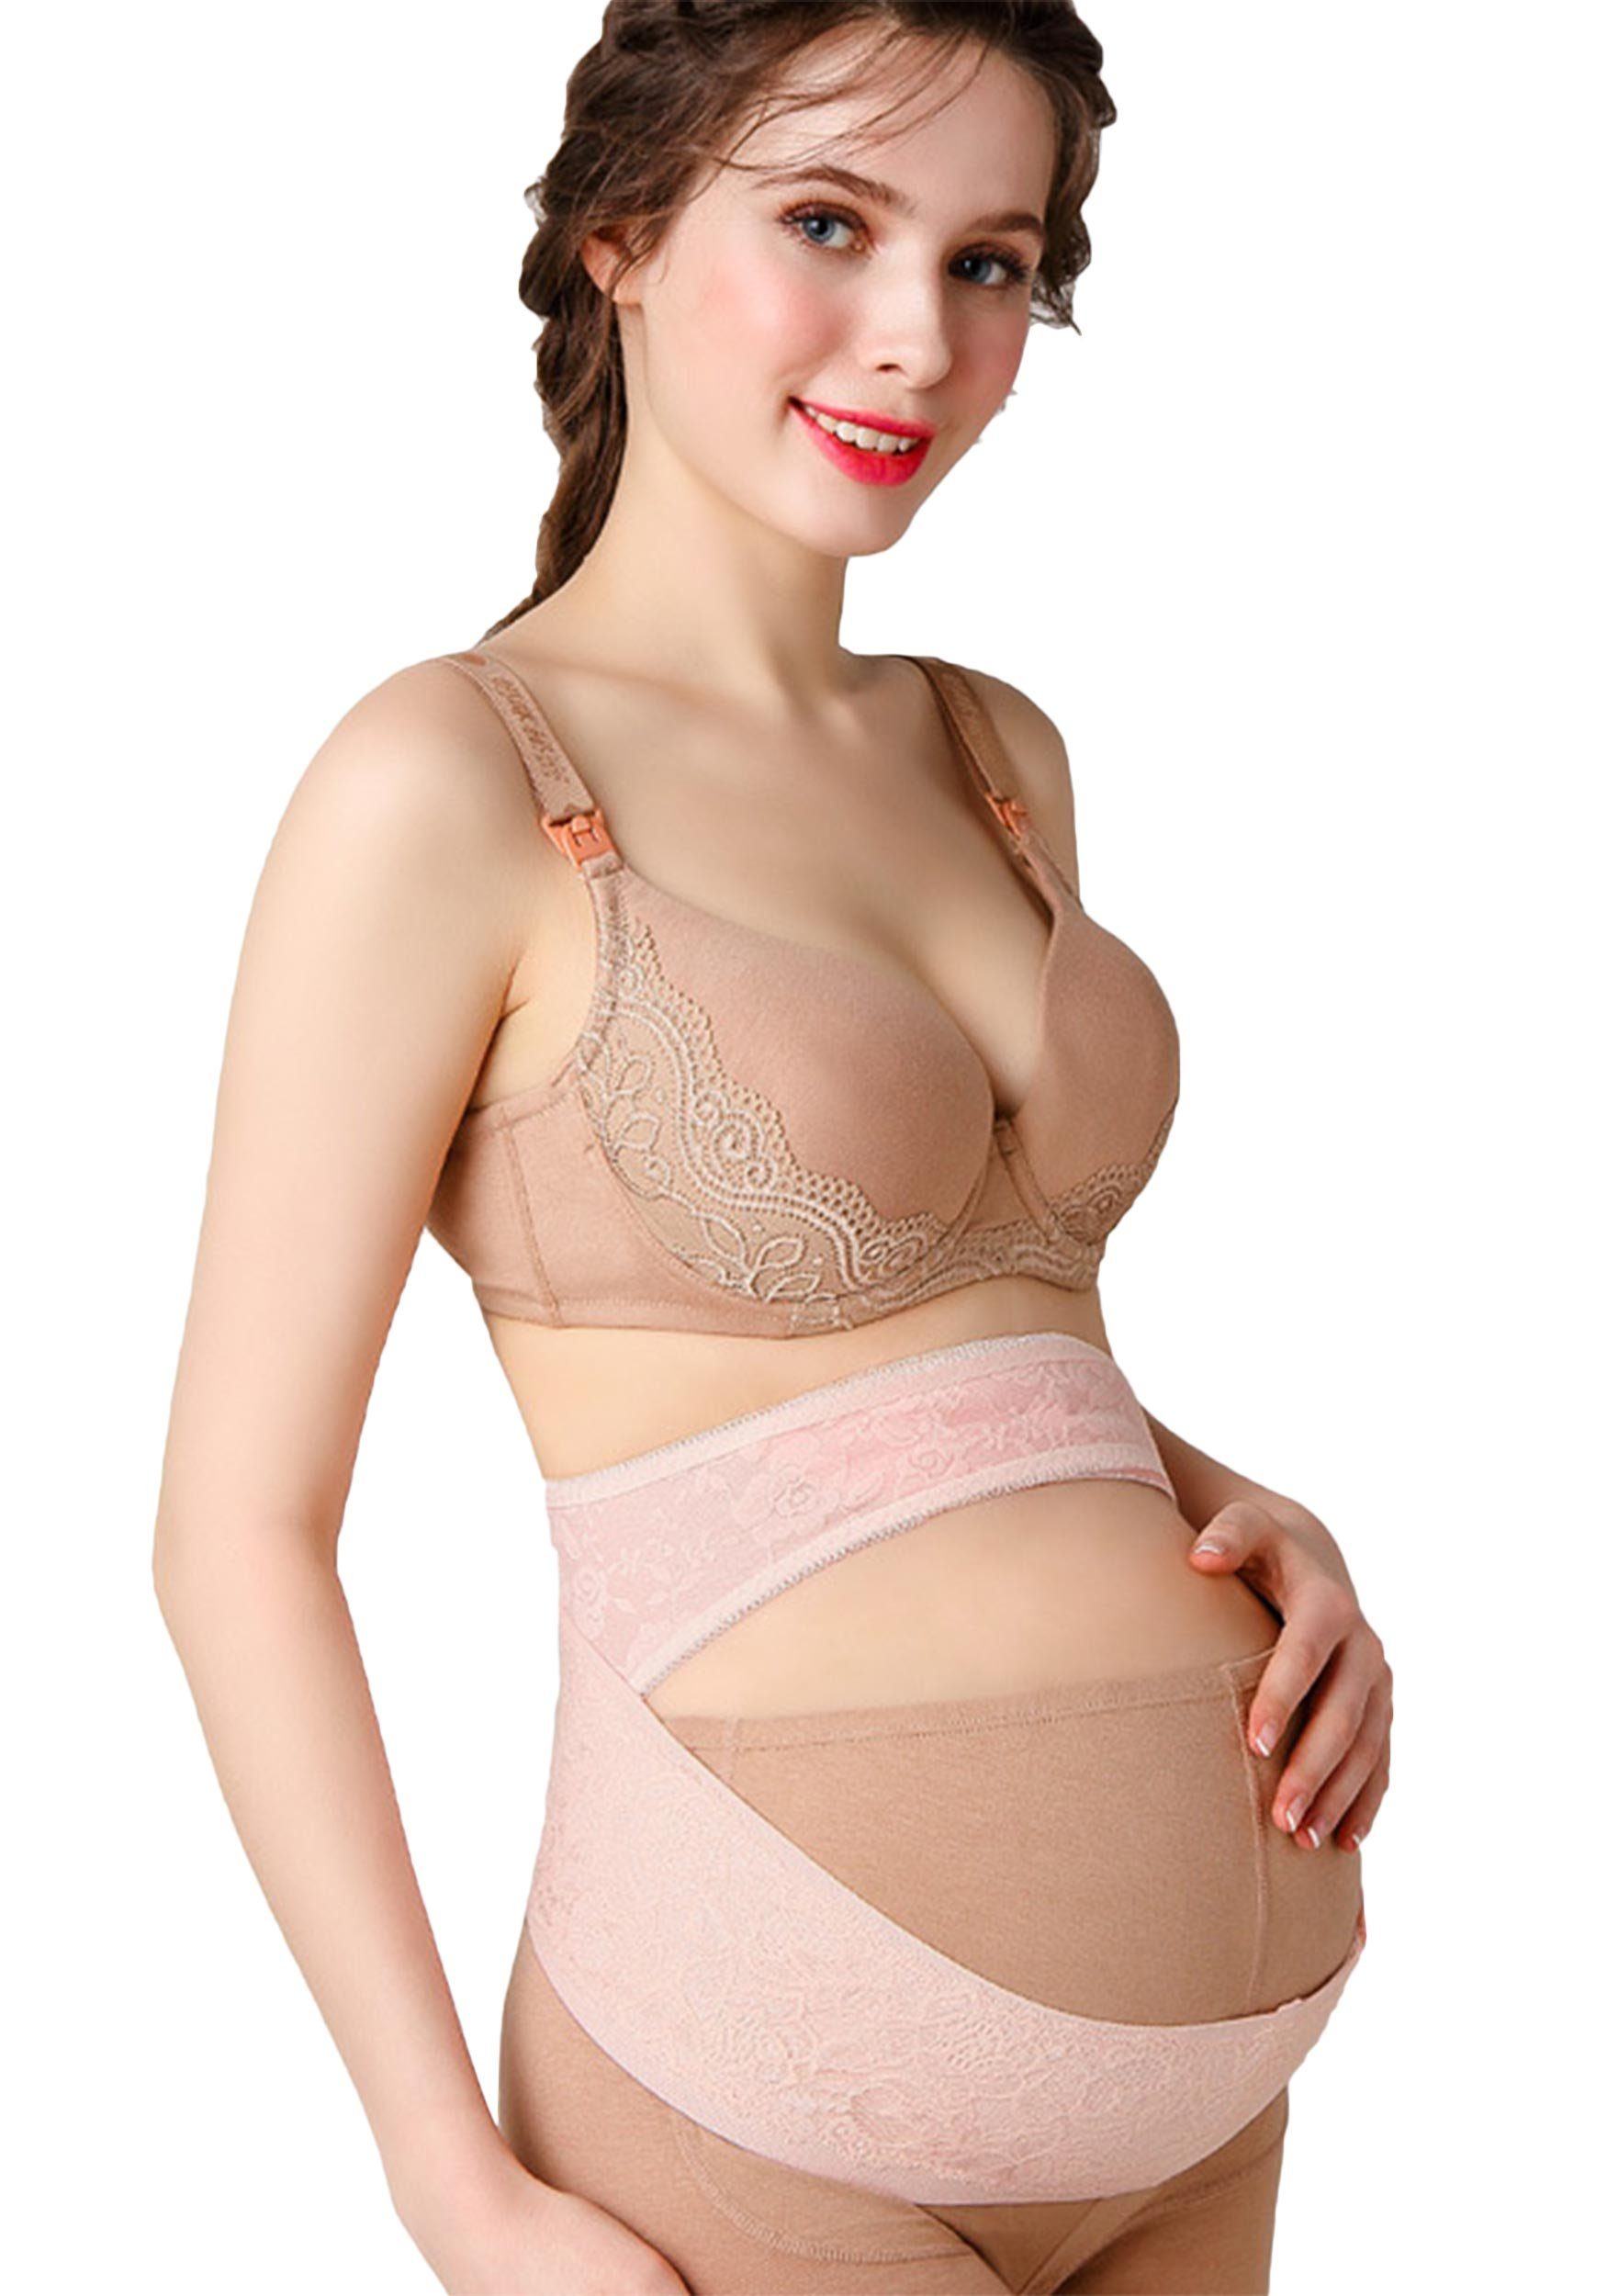 MAGICSHE Schwangerschaftsgürtel Schwangerschaftsgürtel lindern Beckenbodenschmerzen unterstützen Rosa und